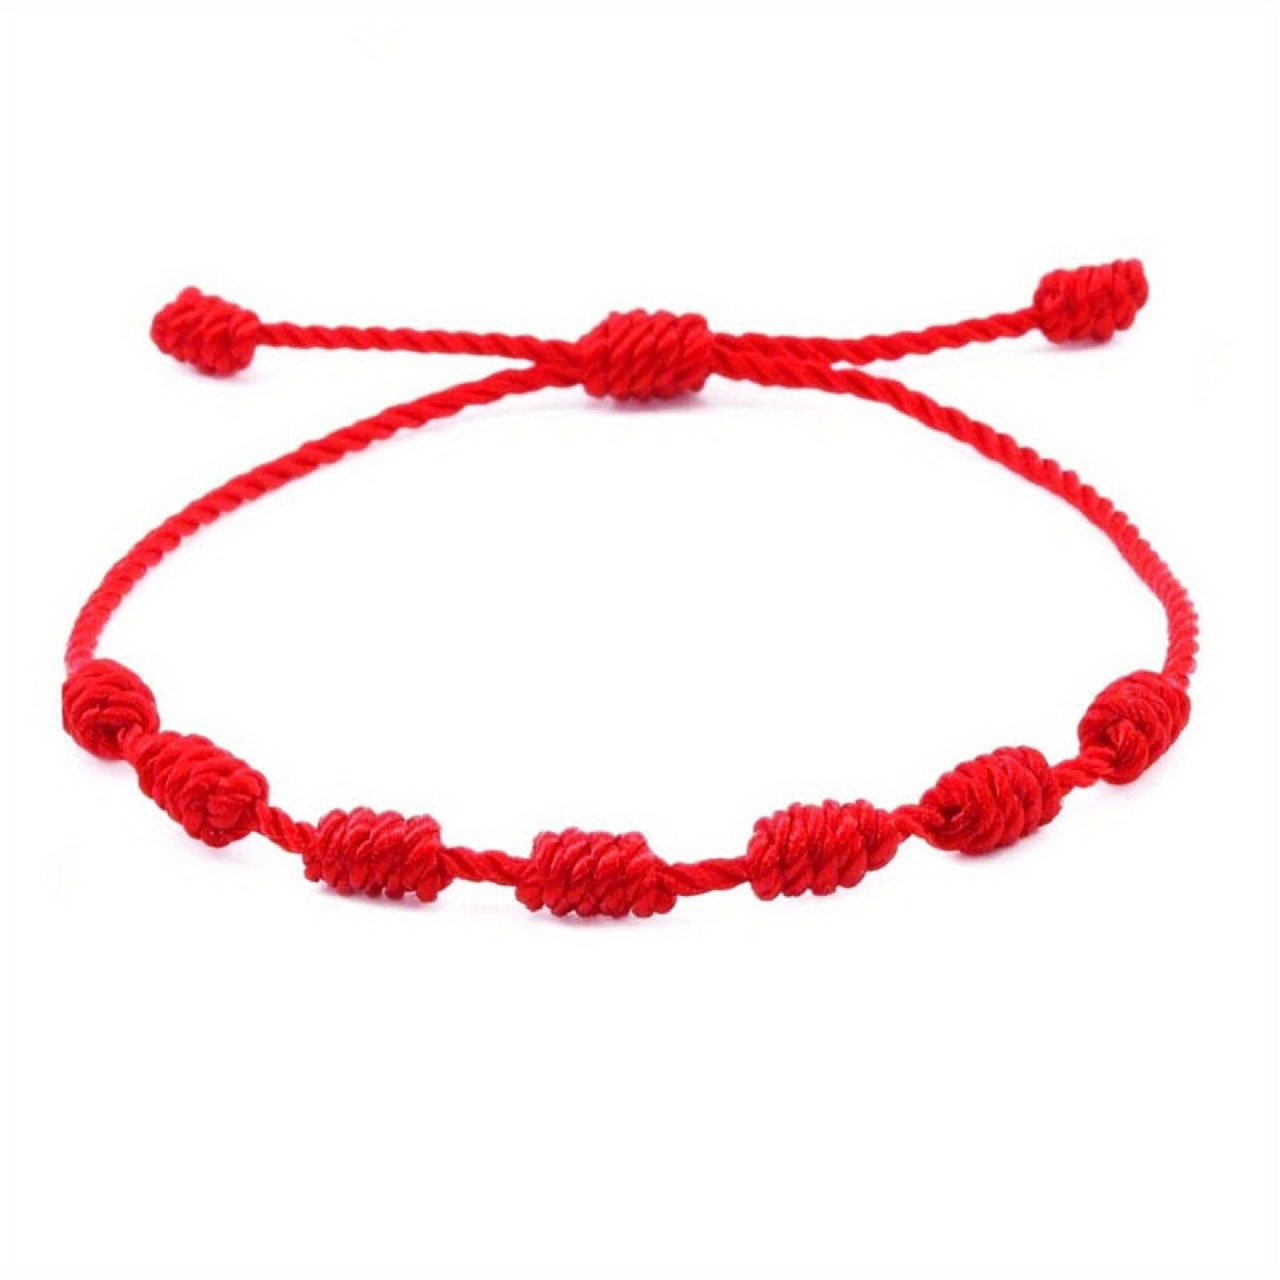 Friendship bracelet  How to make a bracelet, Beads Charm Cord Thread String  Good Luck Bracelet 